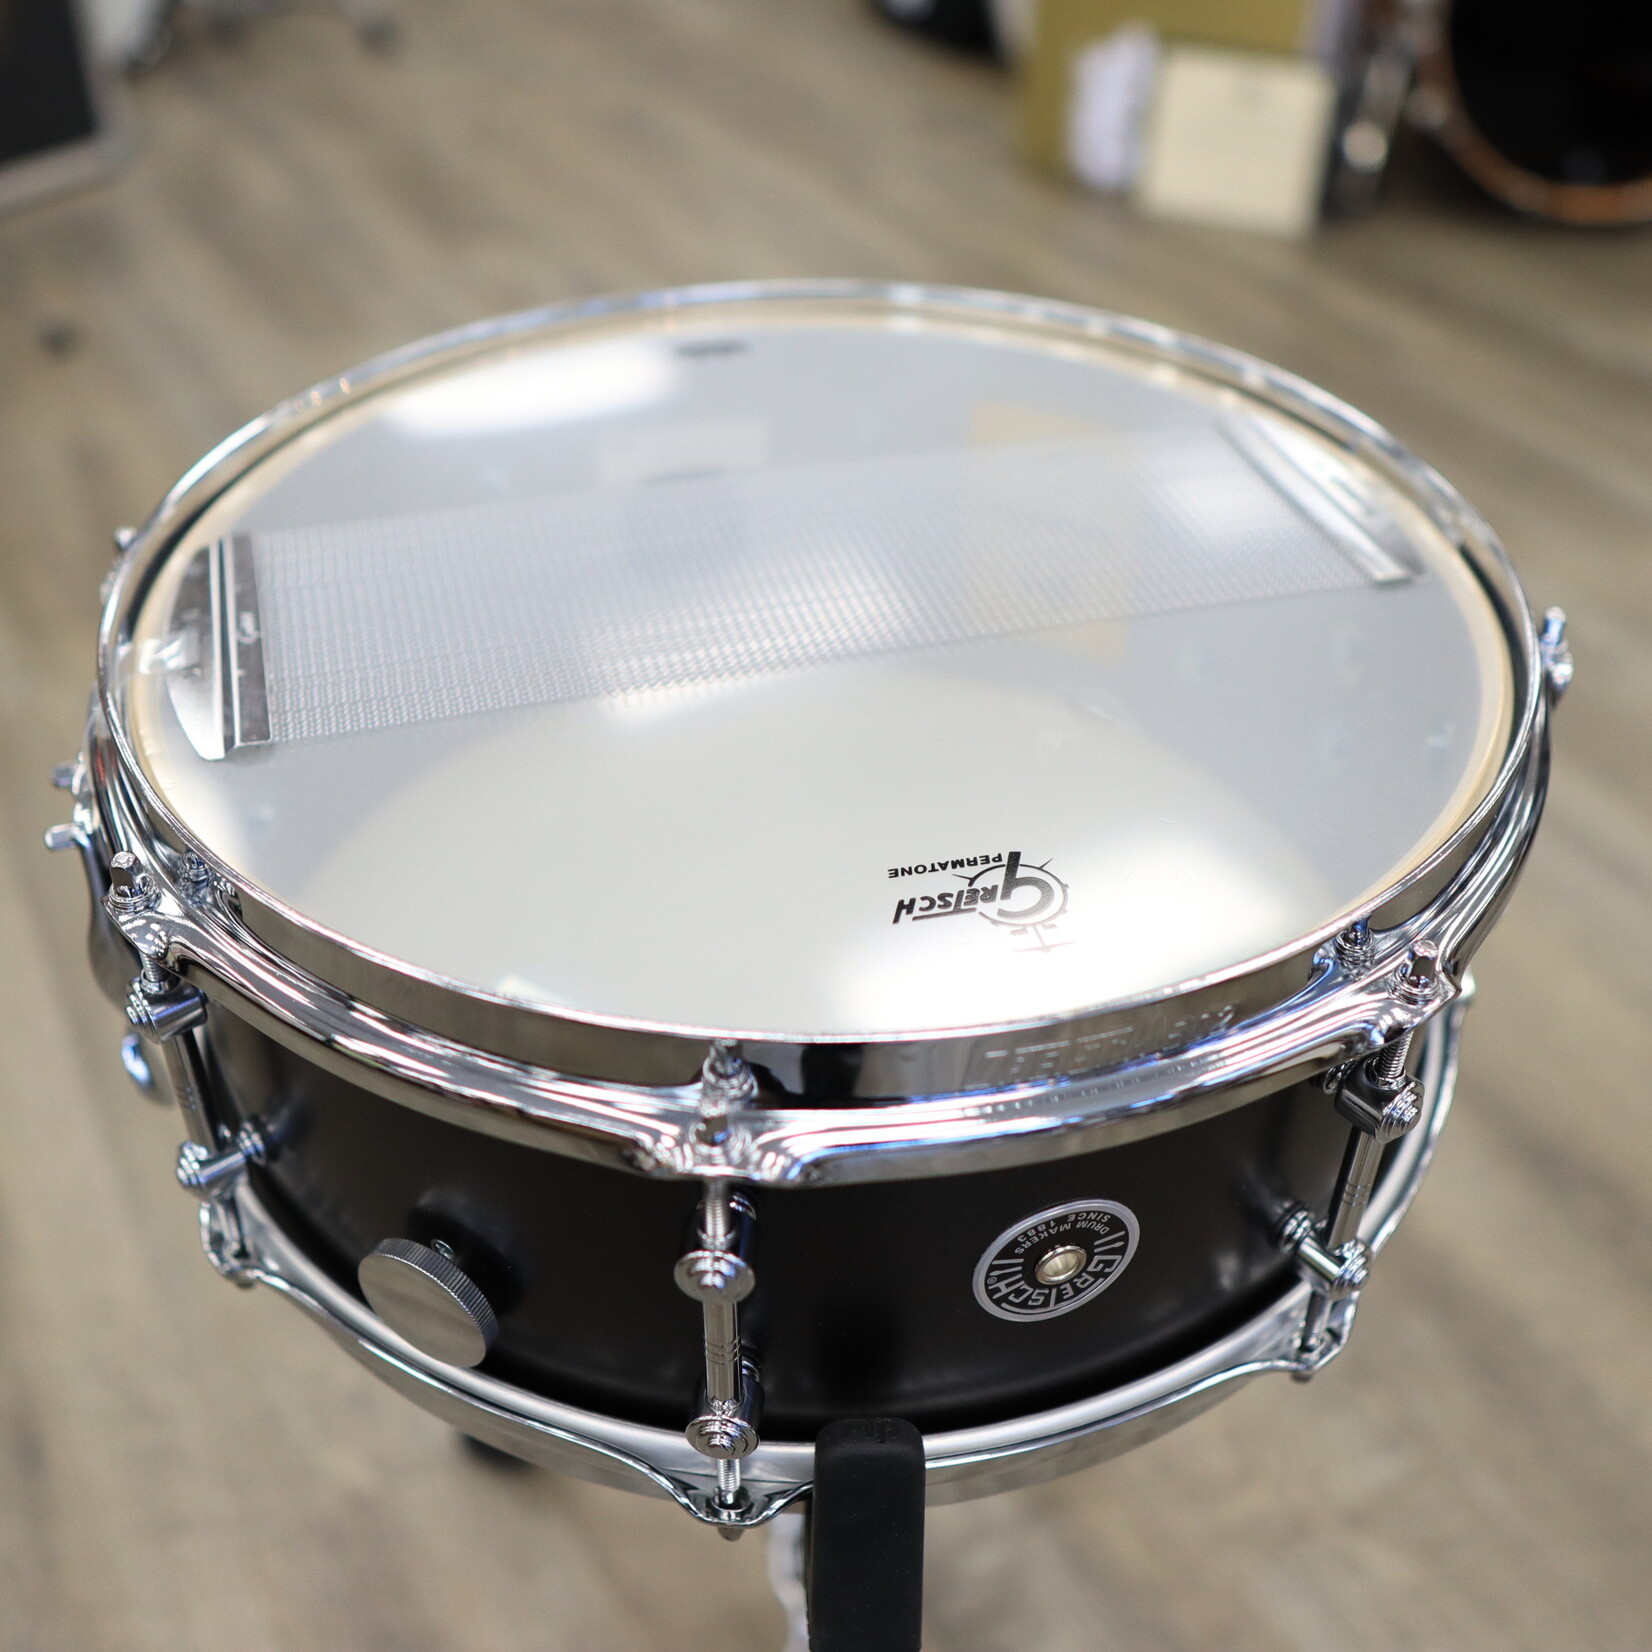 Gretsch Used Gretsch Brooklyn Standard 5.5x14" Snare Drum